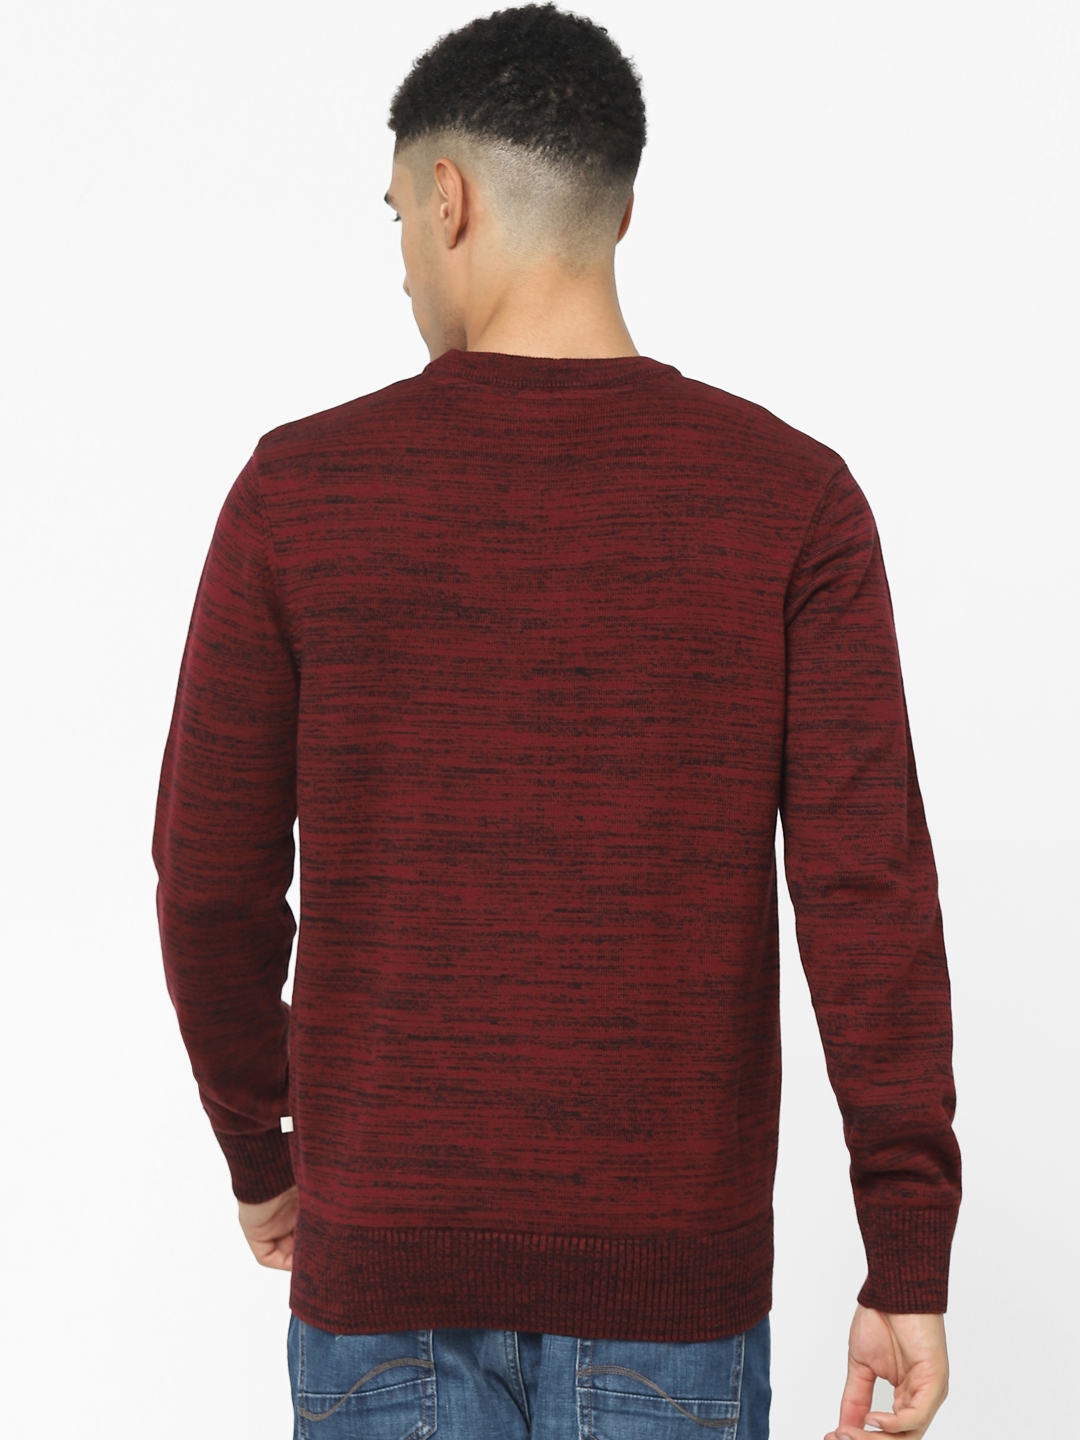 Men's Burgundy Textured Sweaters